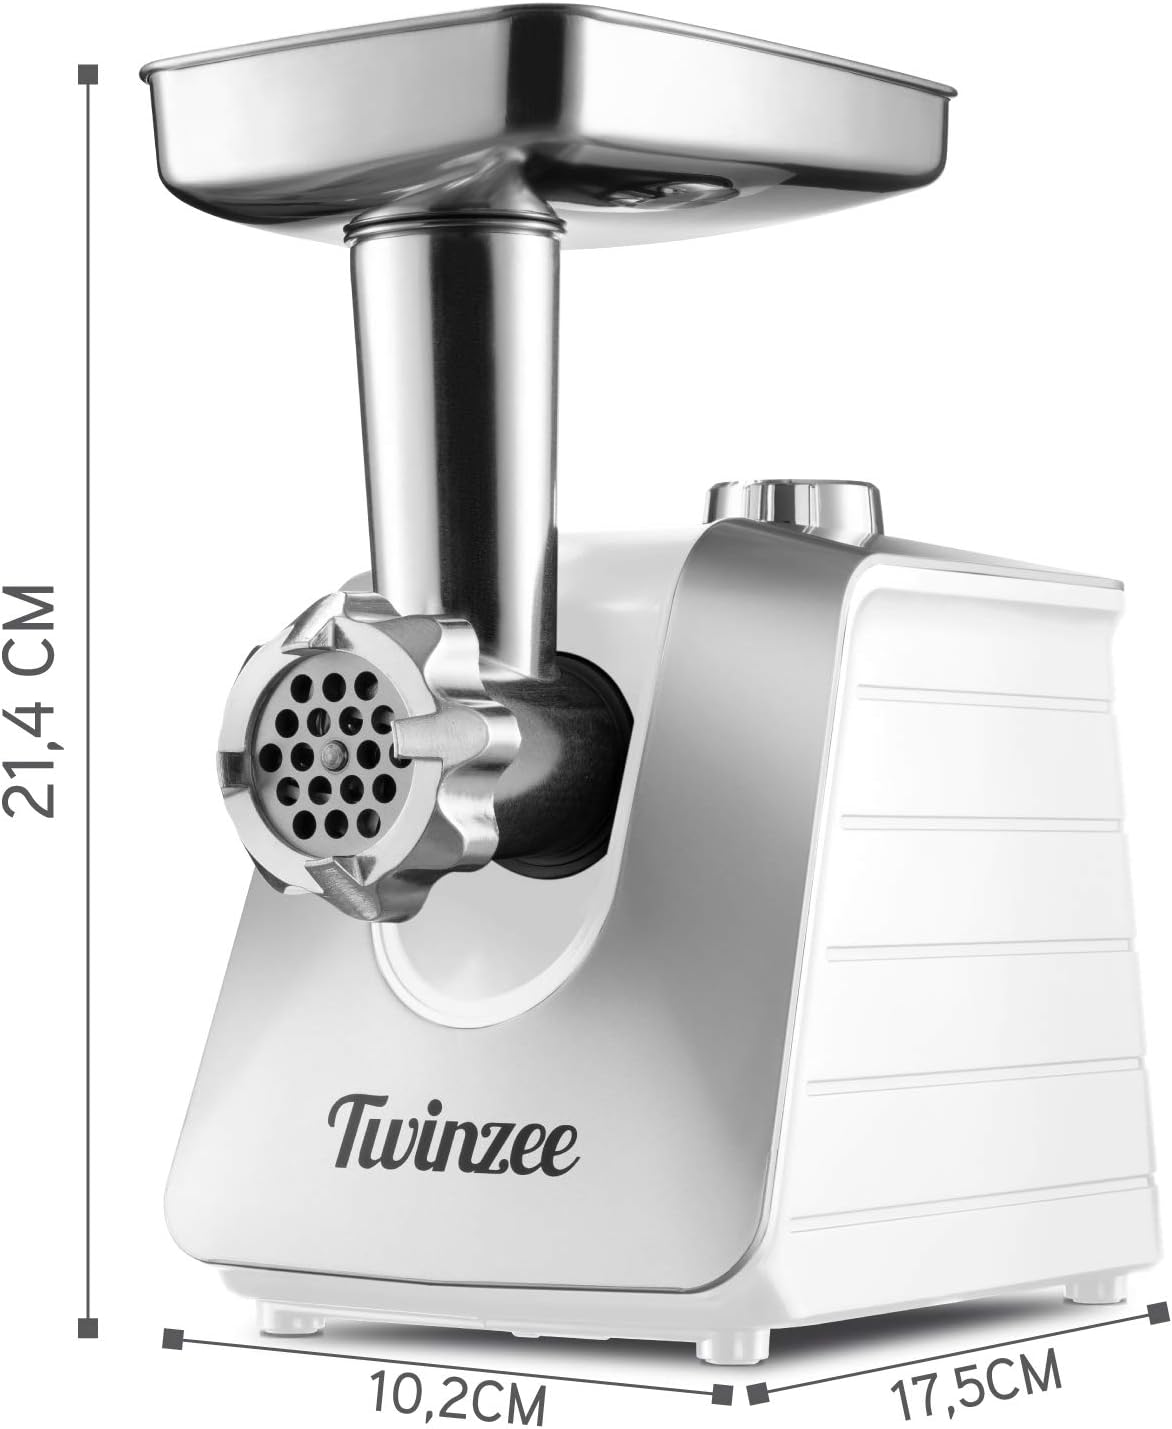 Twinzee Electric Mincer